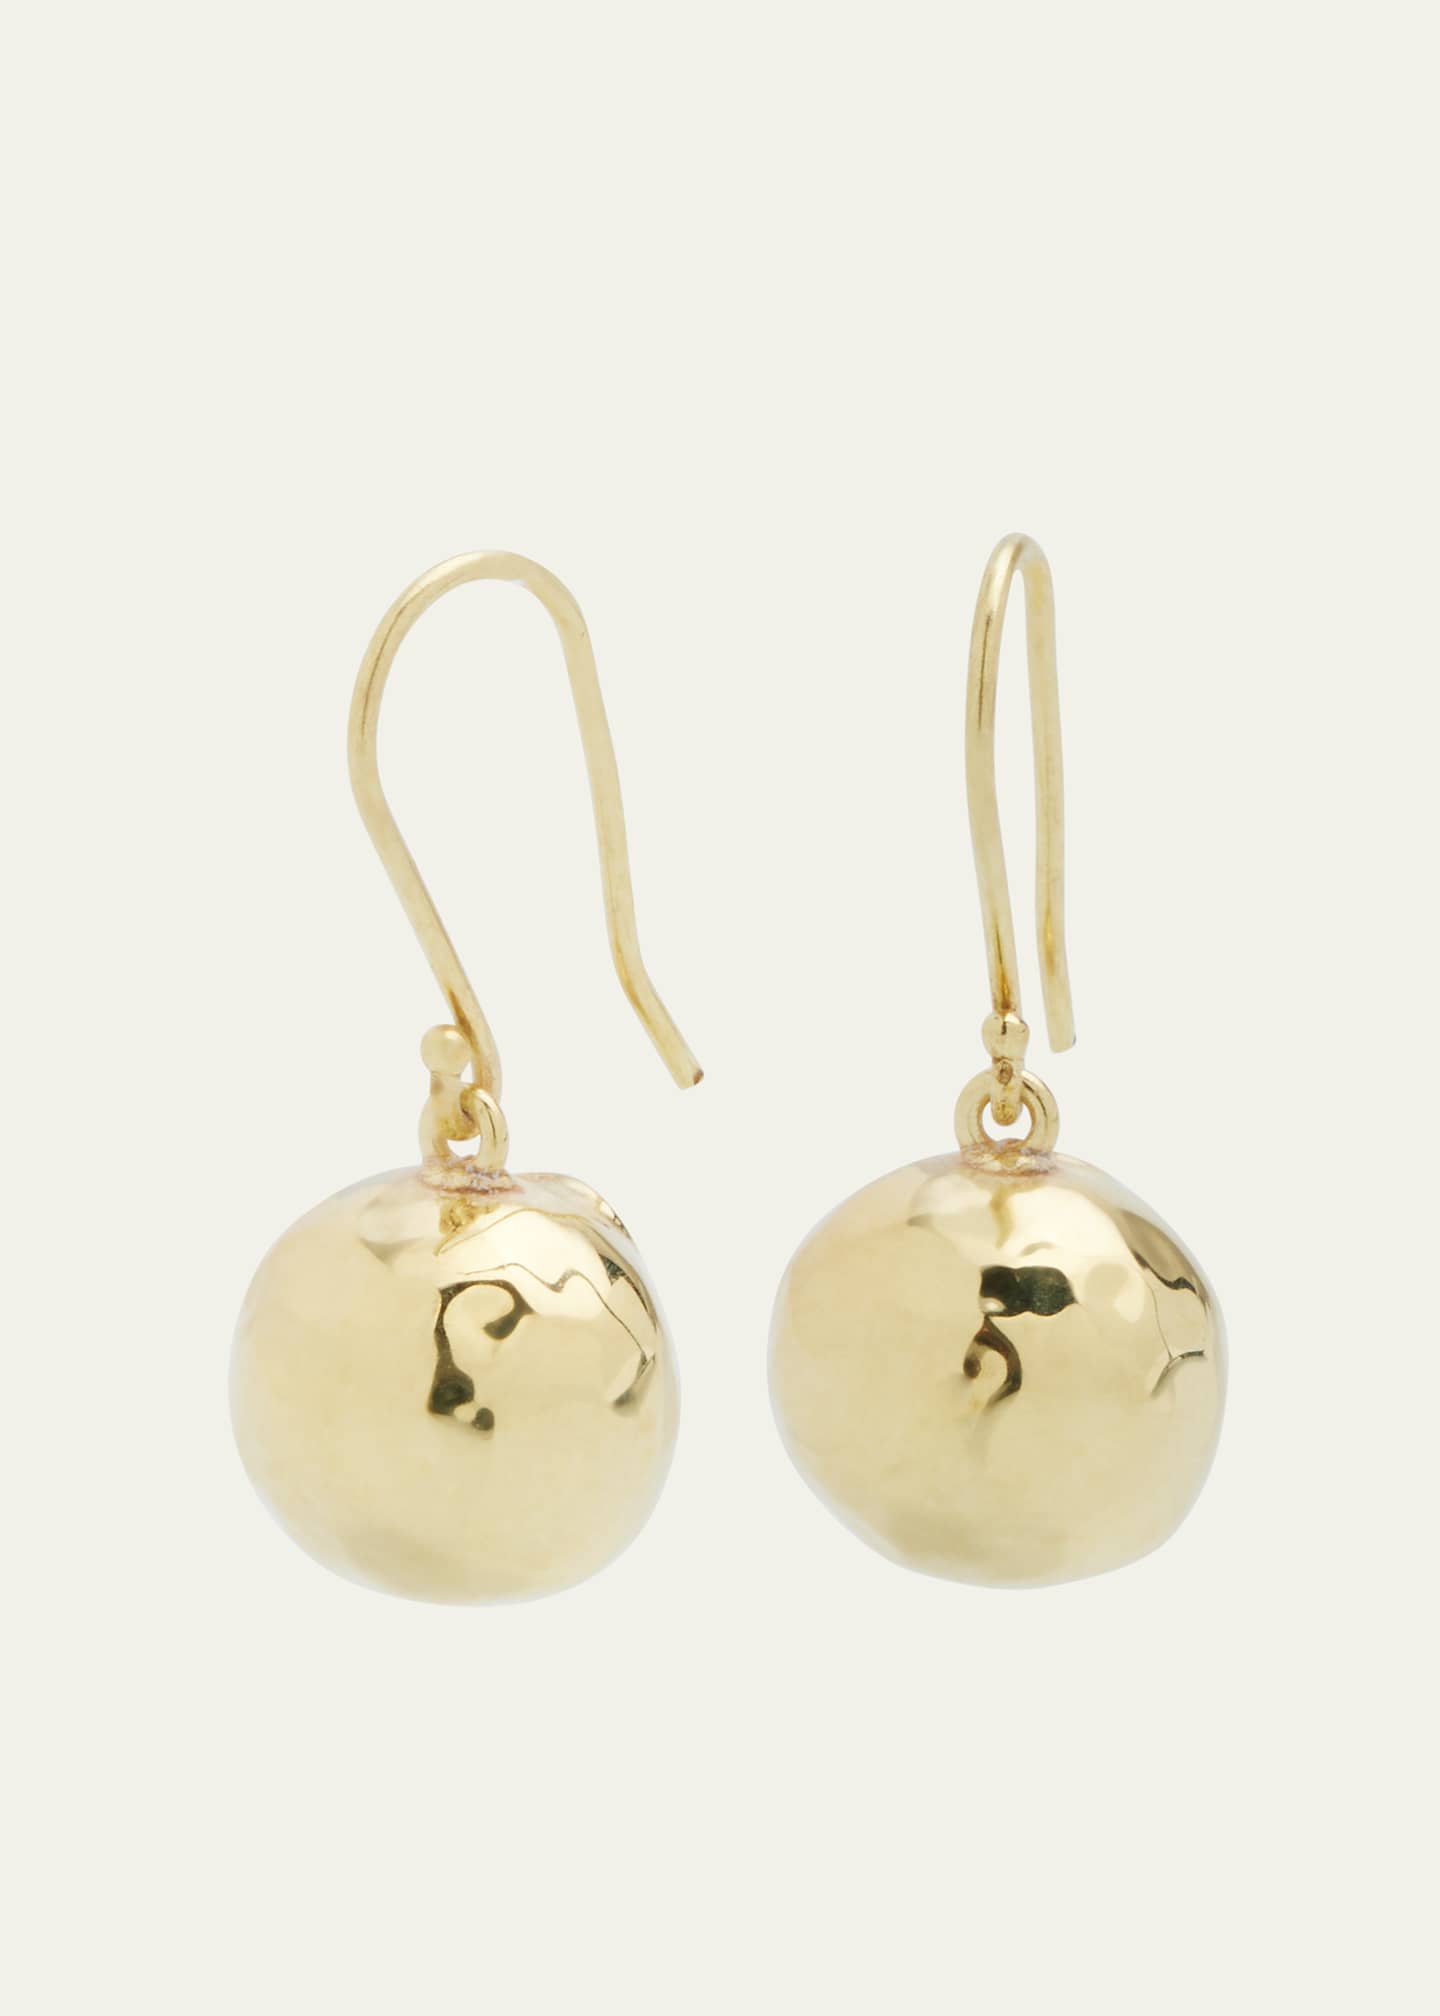 Ippolita Small Hammered Ball Drop Earrings in 18K Gold - Bergdorf Goodman